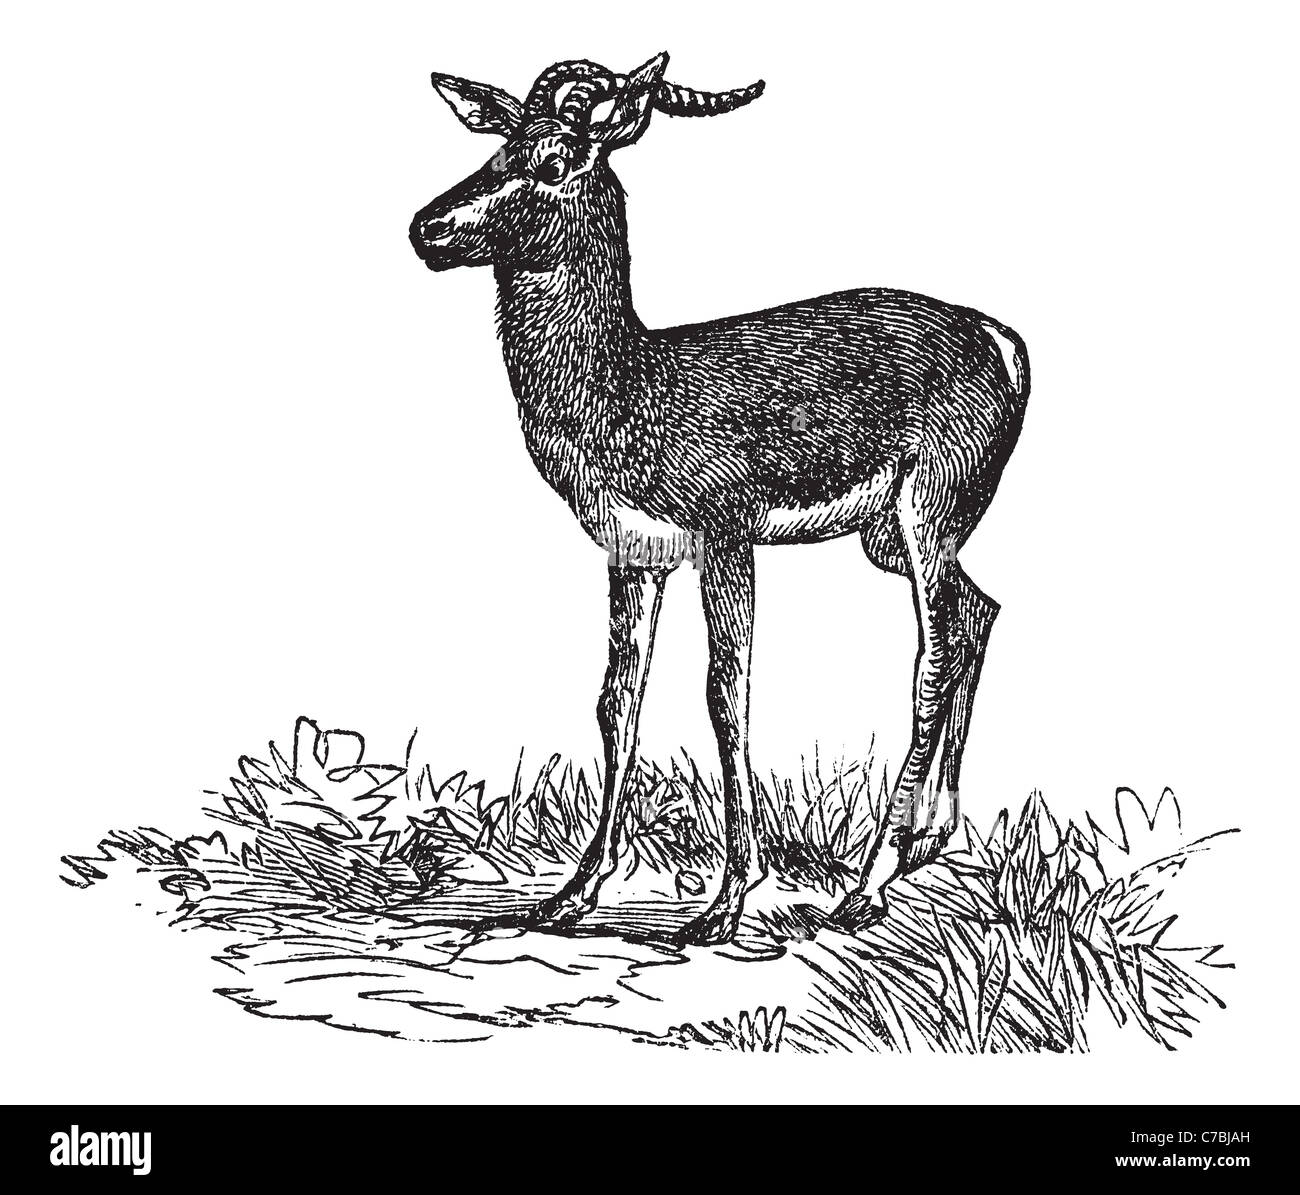 The gazelle Imágenes recortadas de stock - Alamy